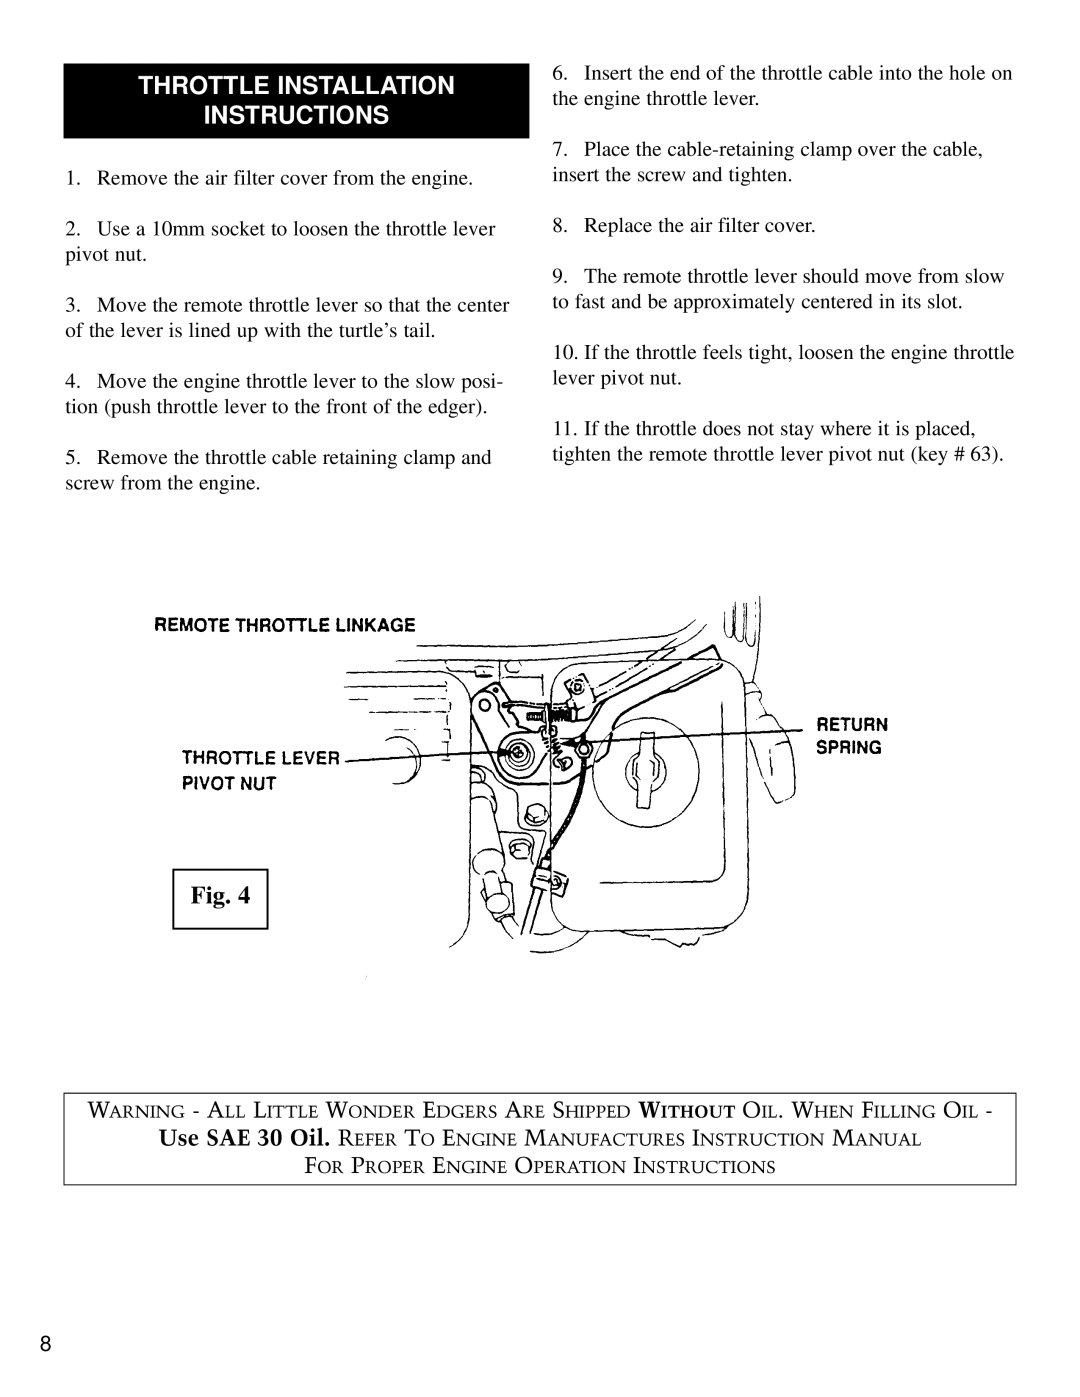 Little Wonder 6232 manual Throttle Installation Instructions 